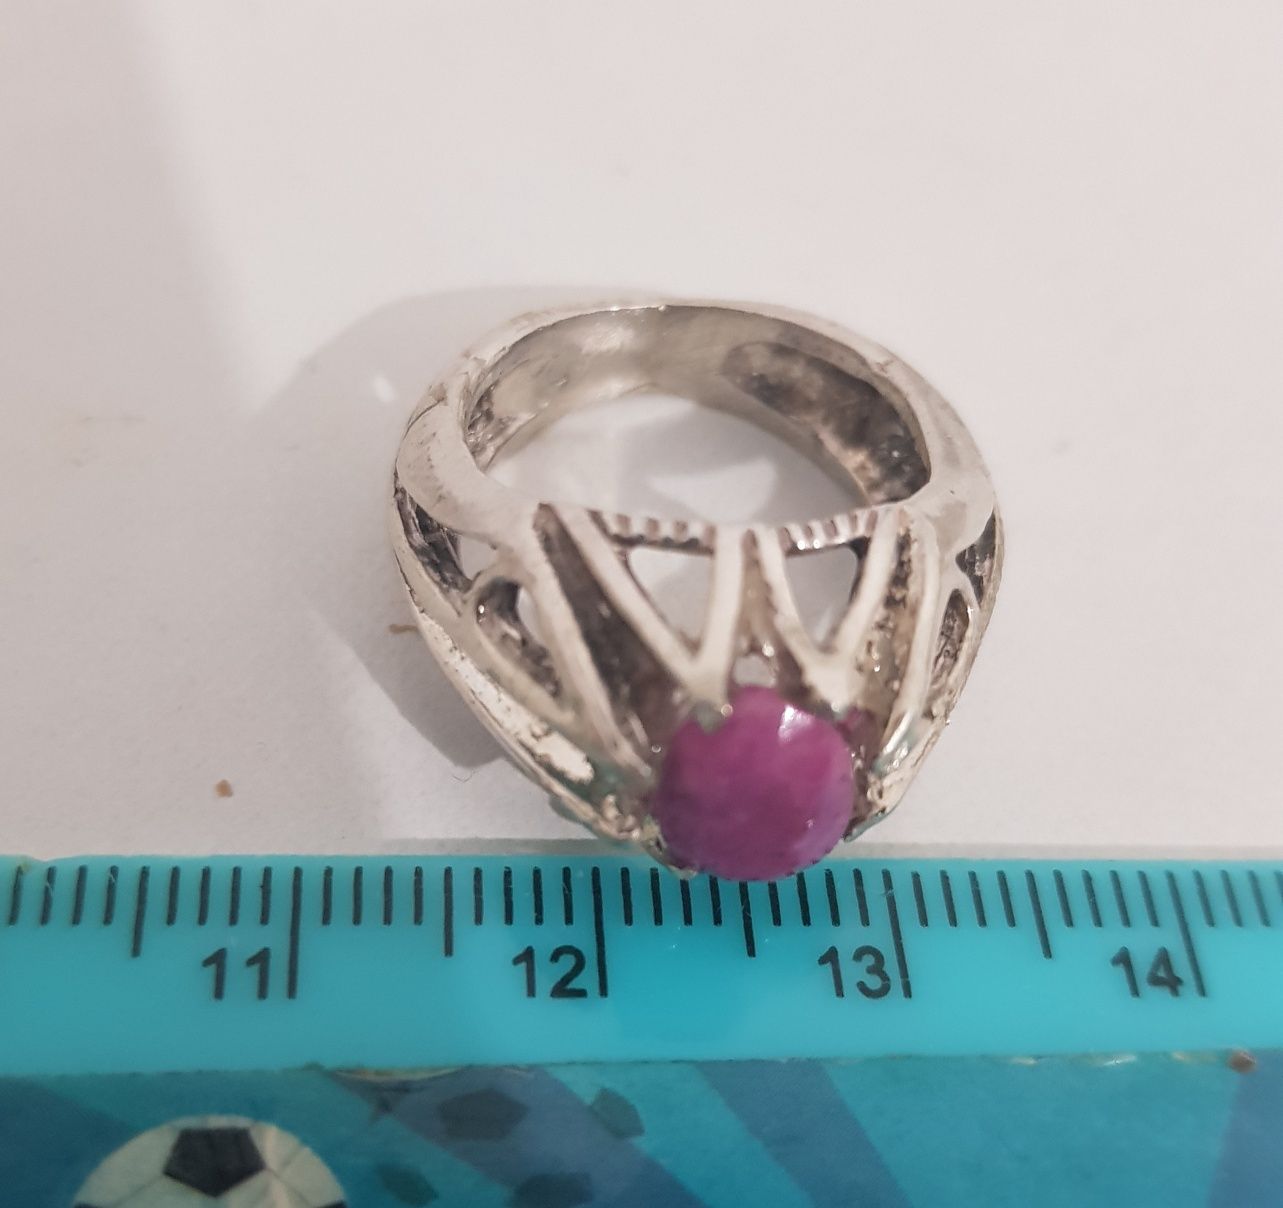 Inel  argint vechi cu piatra naturala radacina de rubin

marima 16 mm